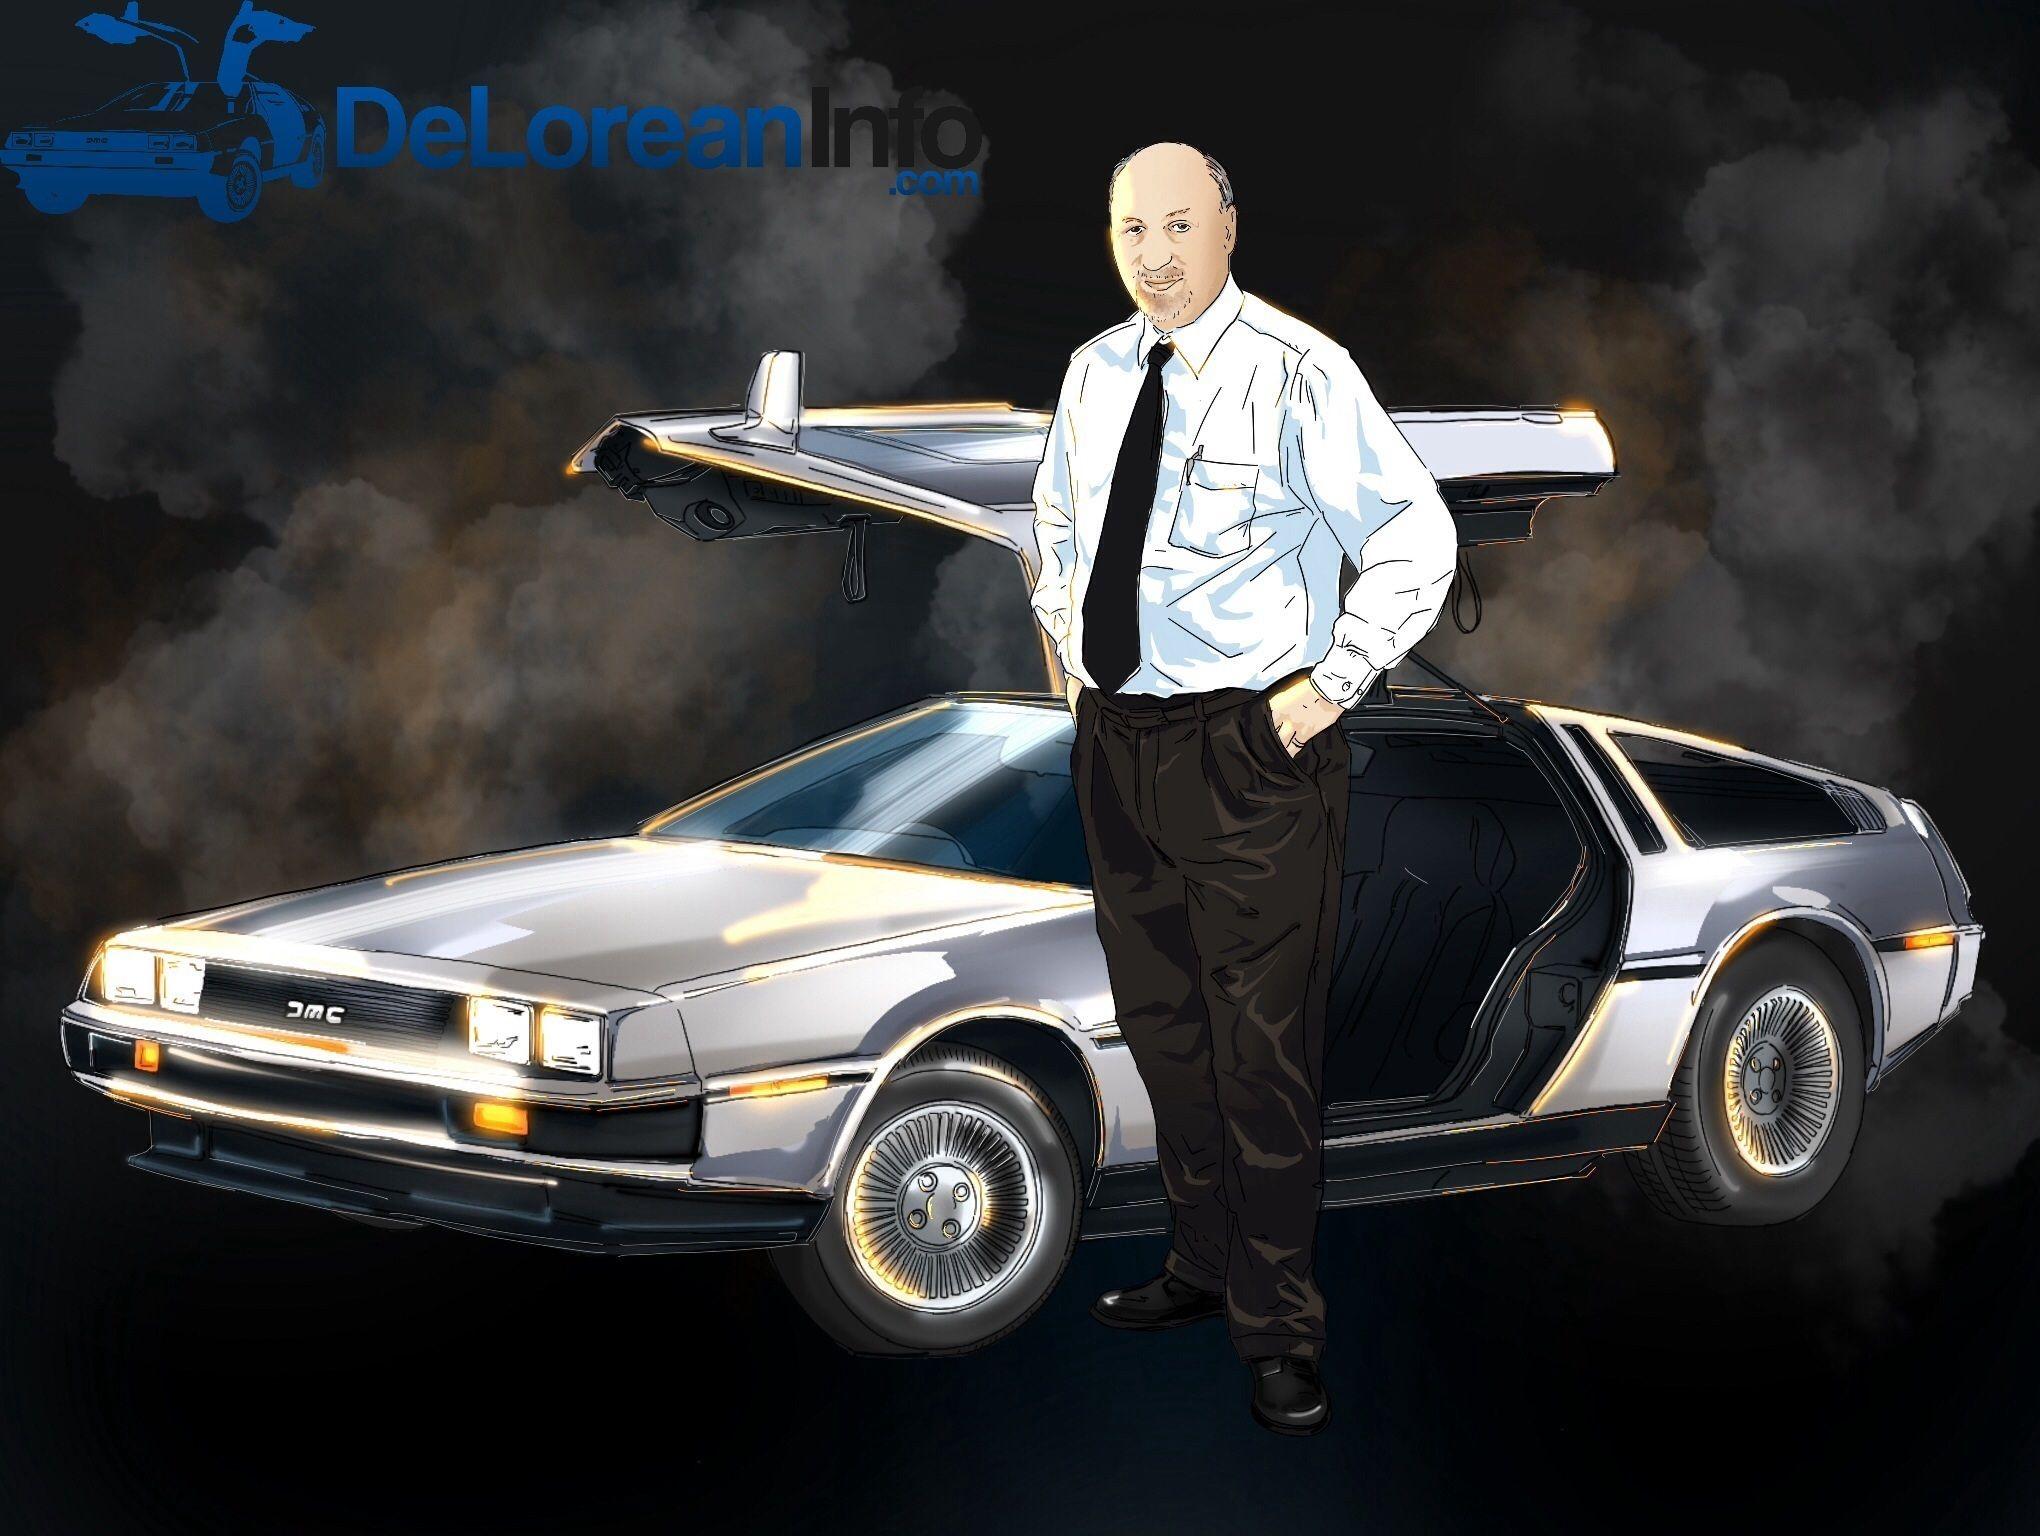 DeLorean DMC-12 Logo - DeLorean Blog Writer Tony De Falco. First Rate DeLorean Information